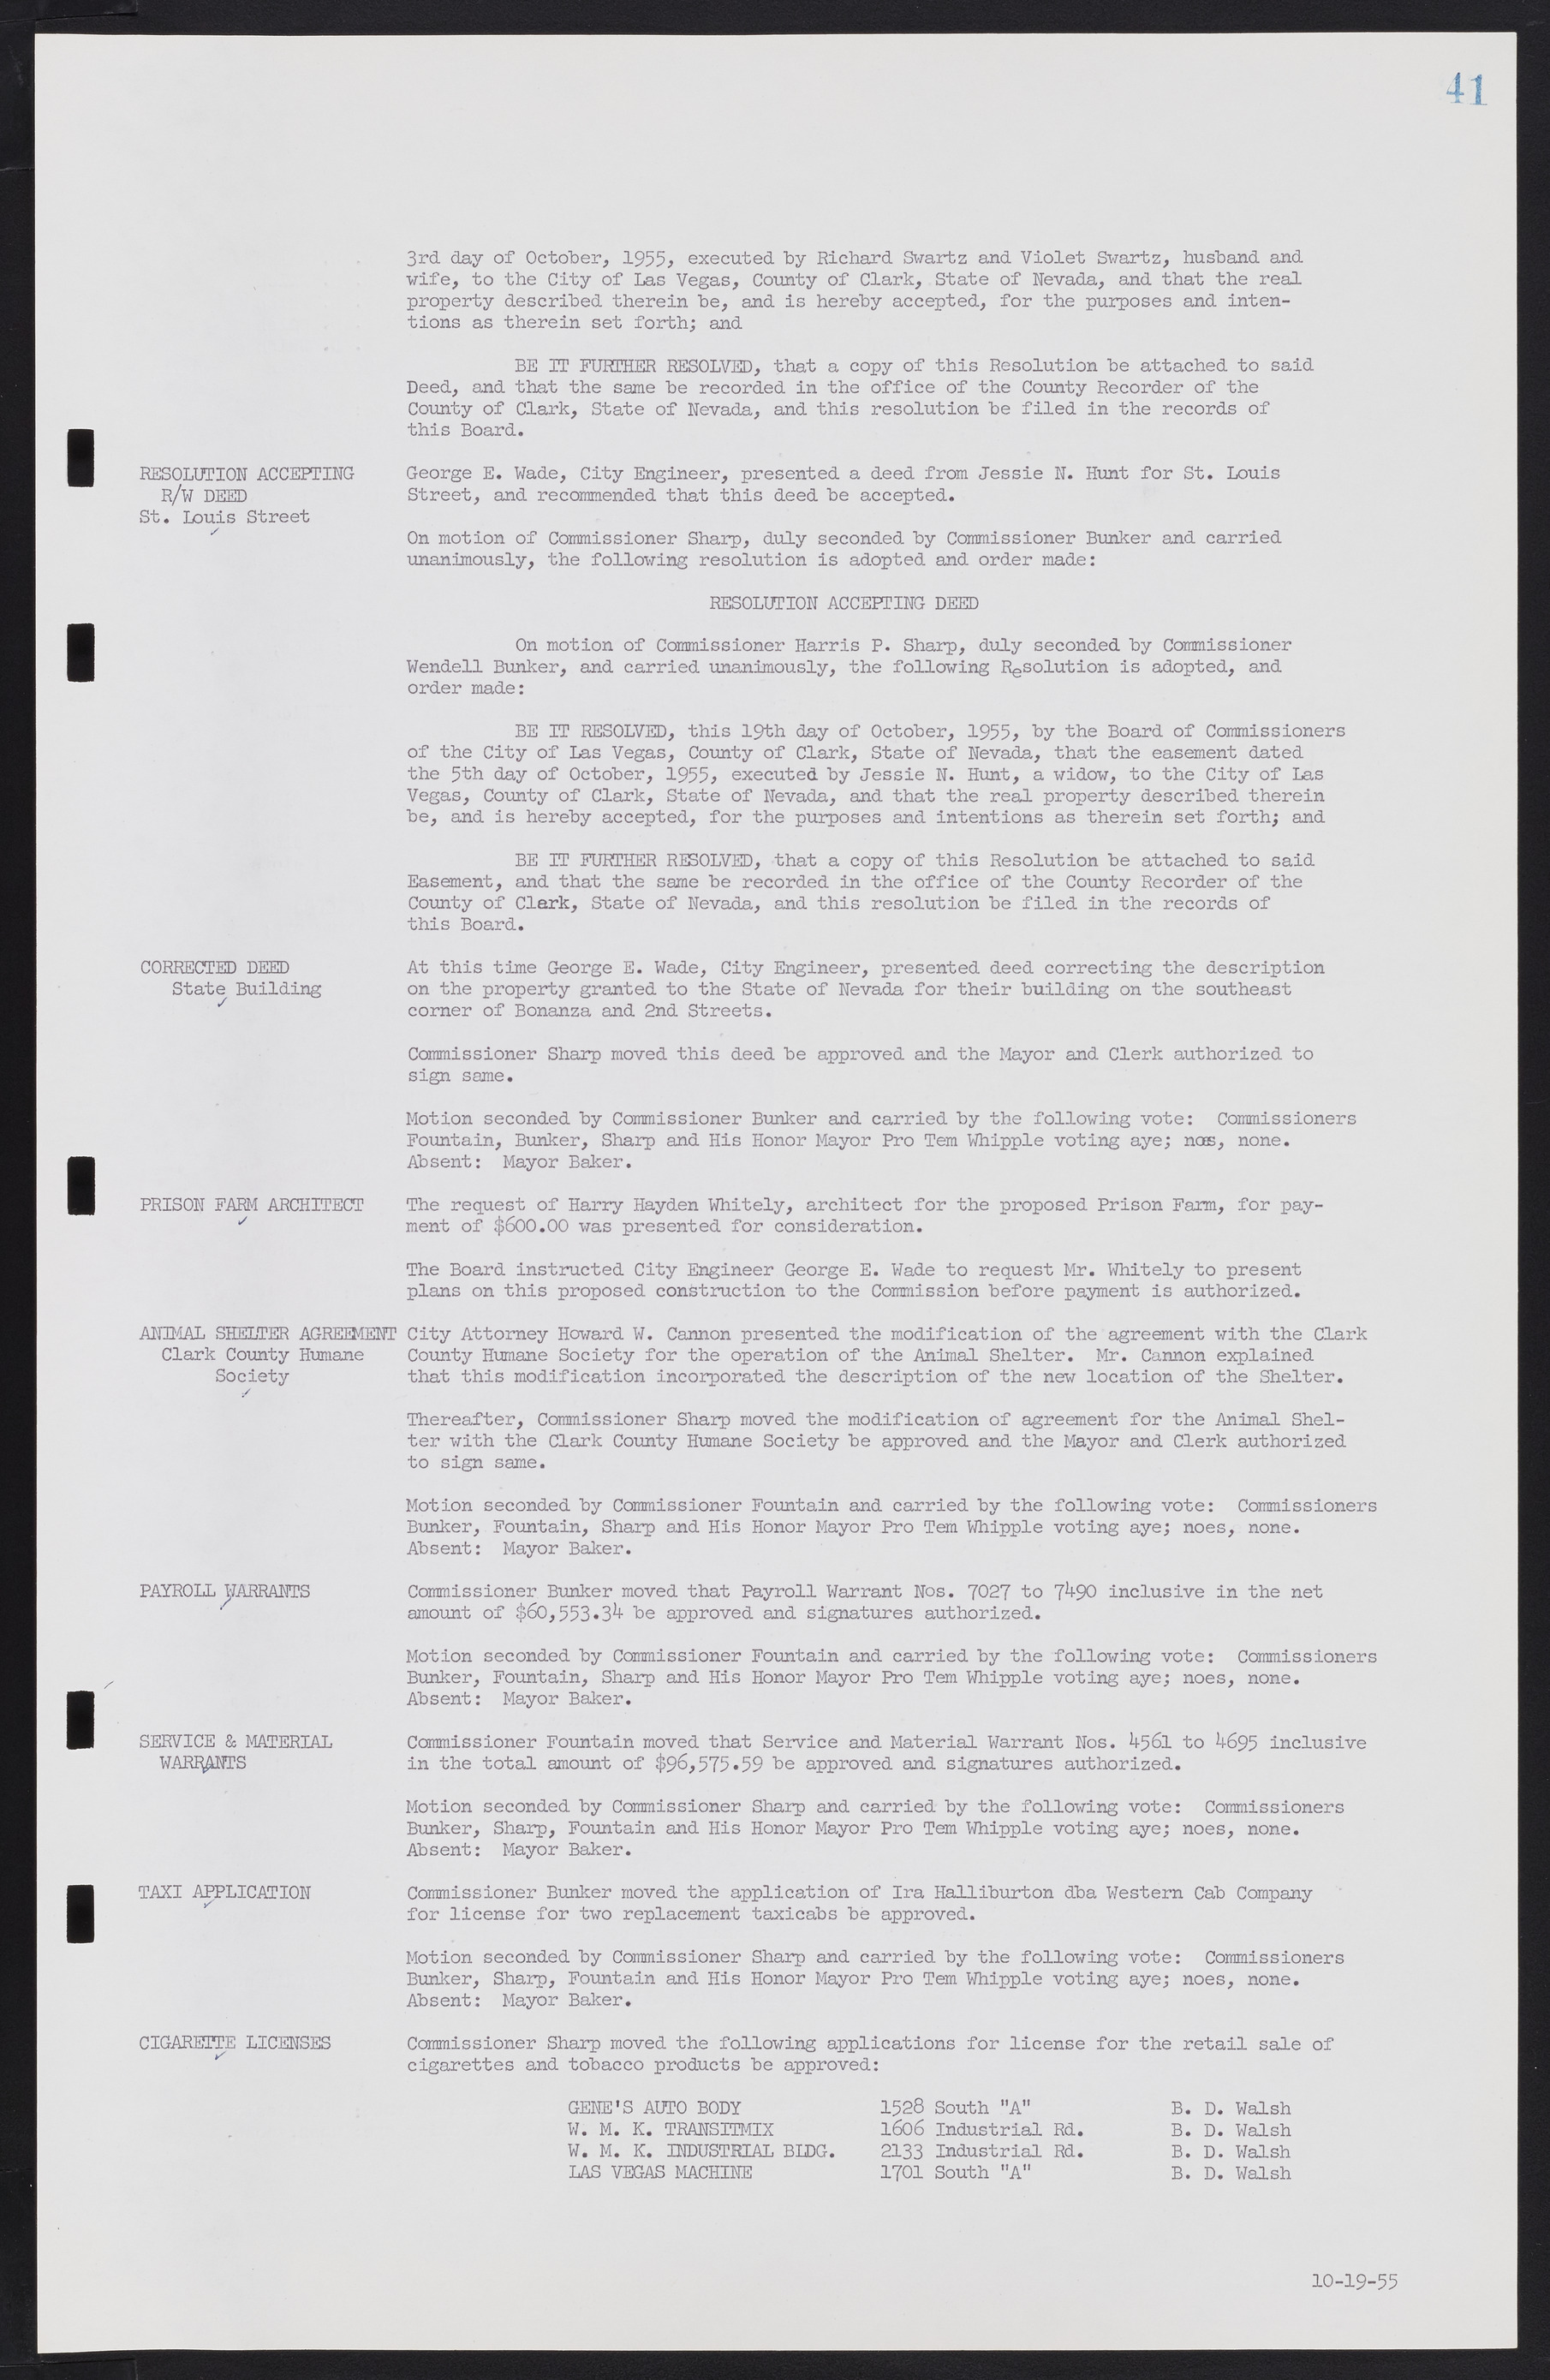 Las Vegas City Commission Minutes, September 21, 1955 to November 20, 1957, lvc000010-47